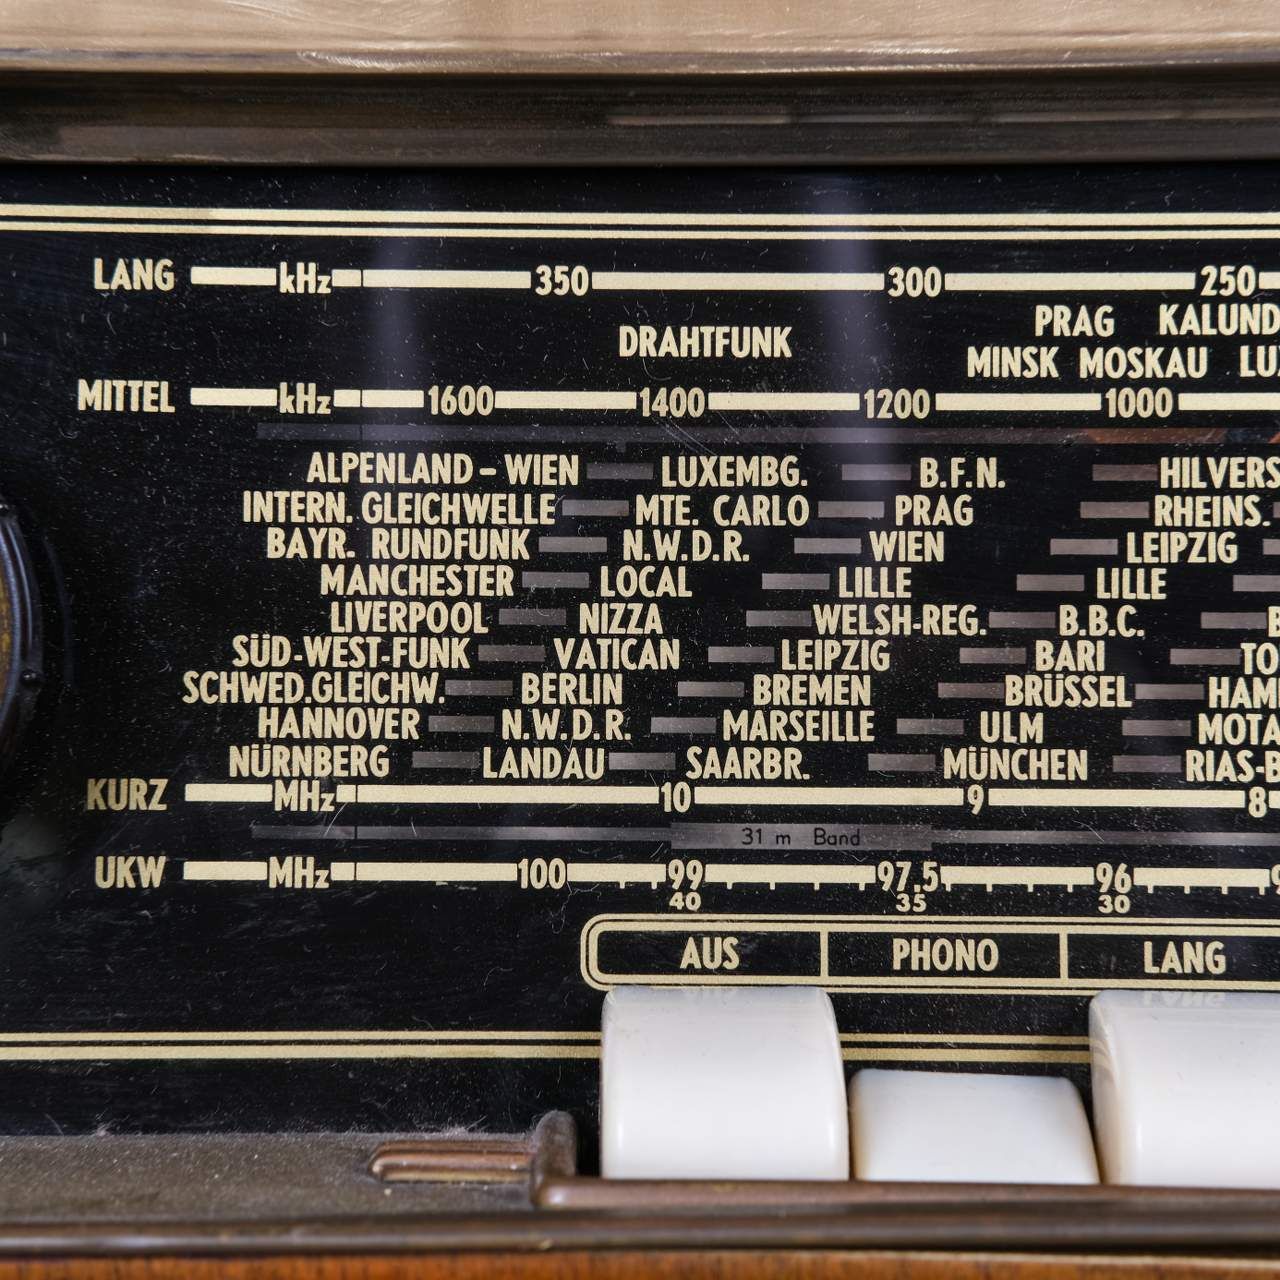 Braun Record Players and Radio